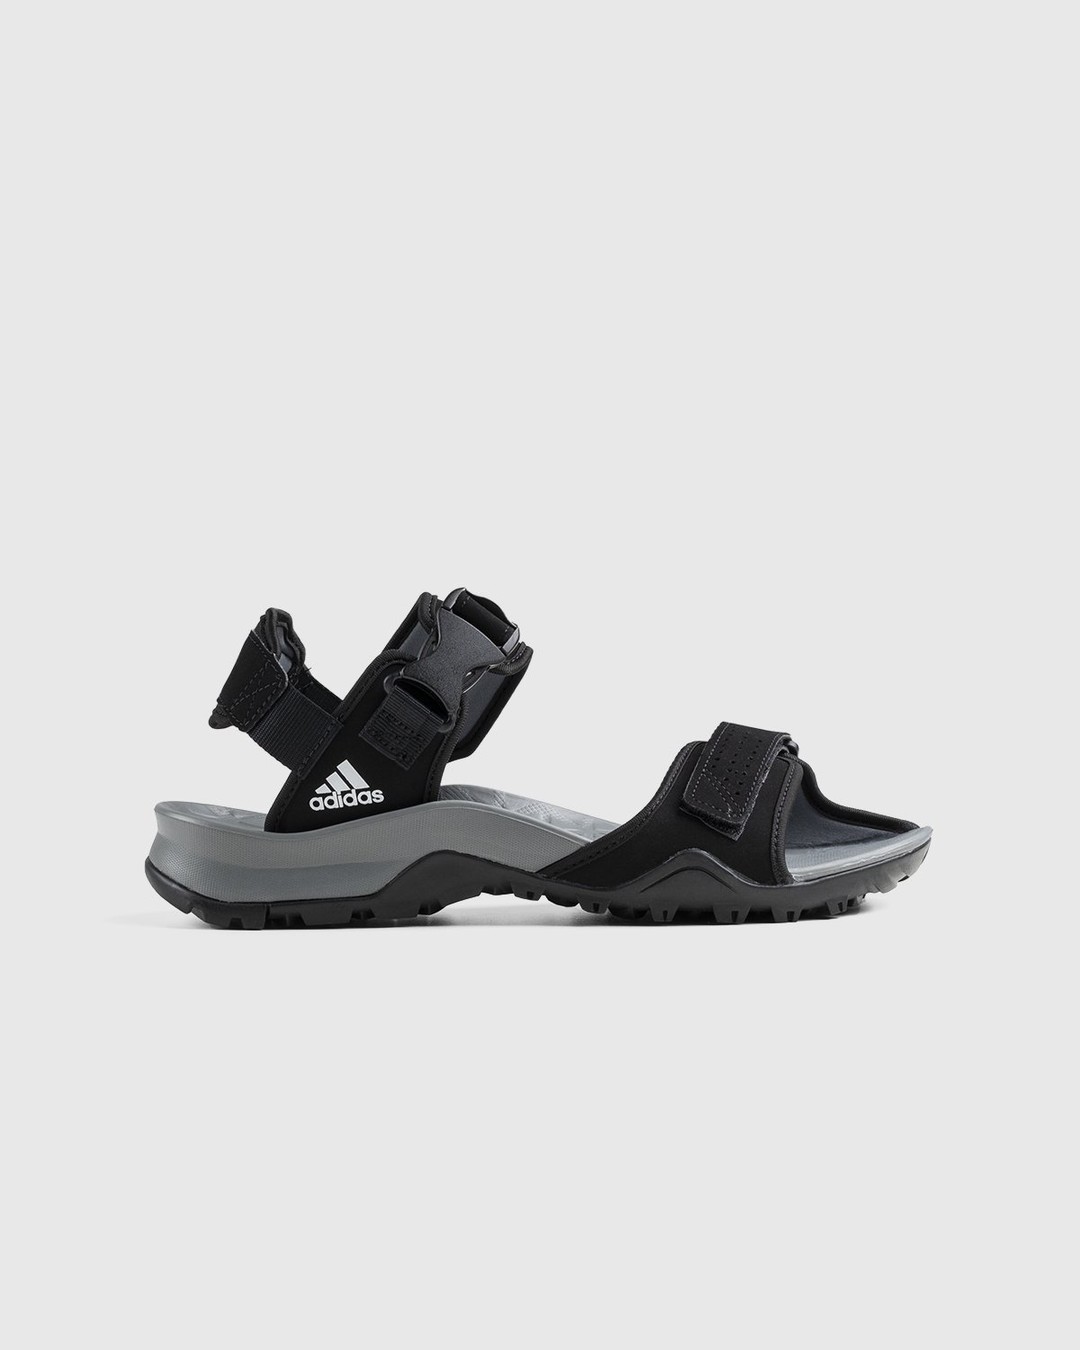 Adidas – Cyprex Ultra II Sandals Core Black Vista Grey Cloud White - Sandals - Black - Image 1